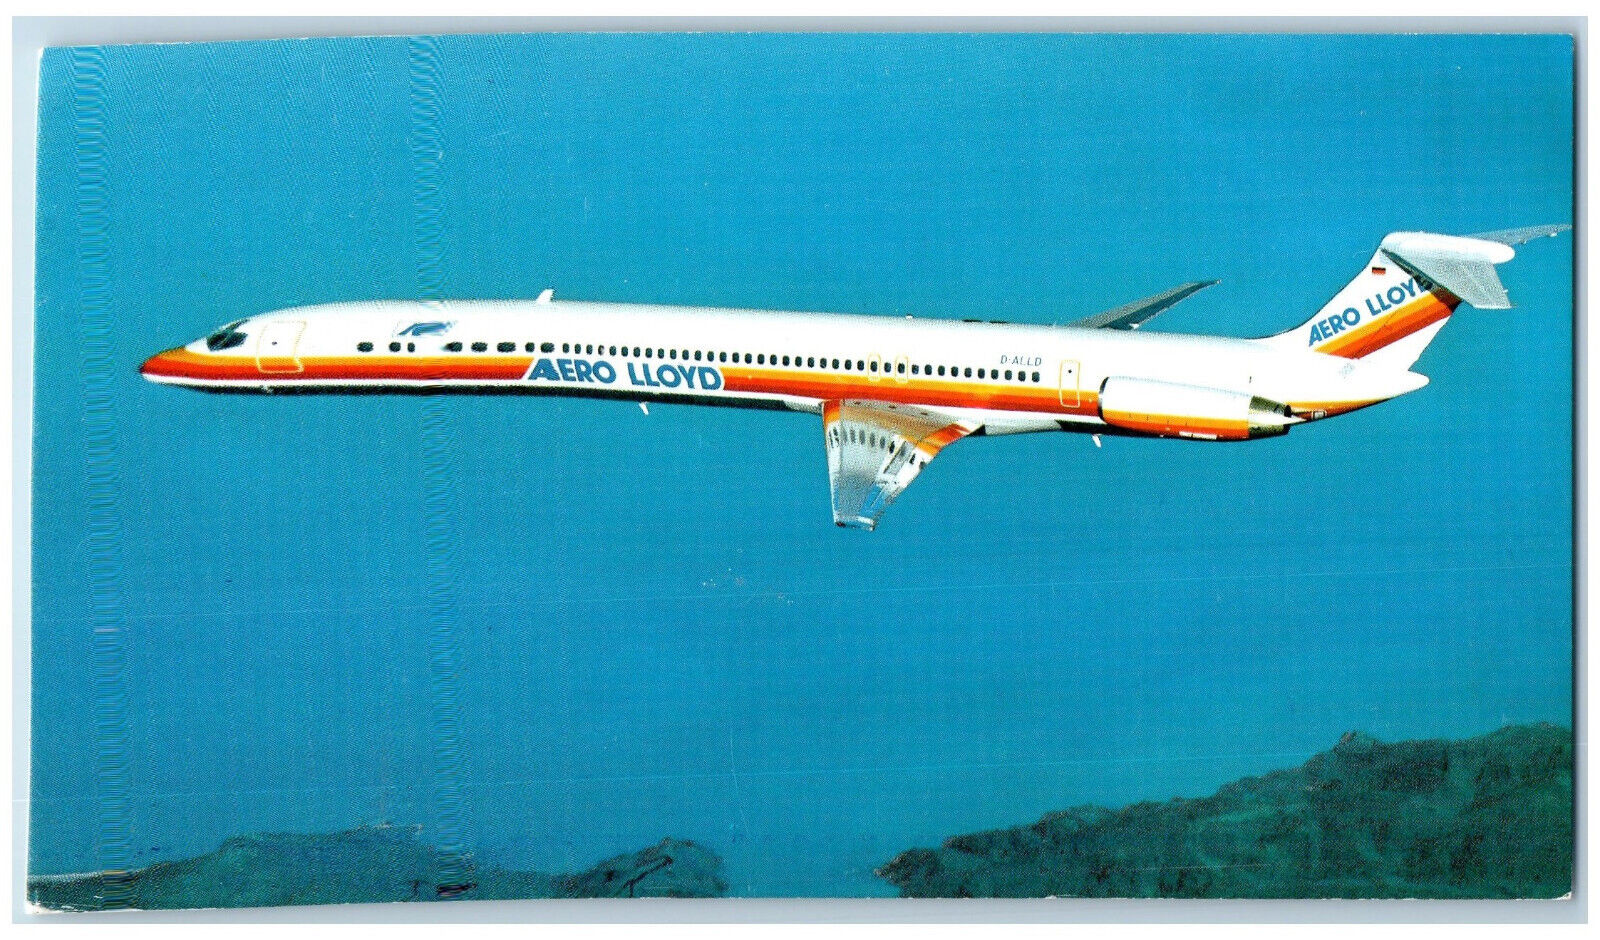 Postcard Mcdonnell-Douglas MD 83 Super Jet Aircraft Aero Lloyd c1950's